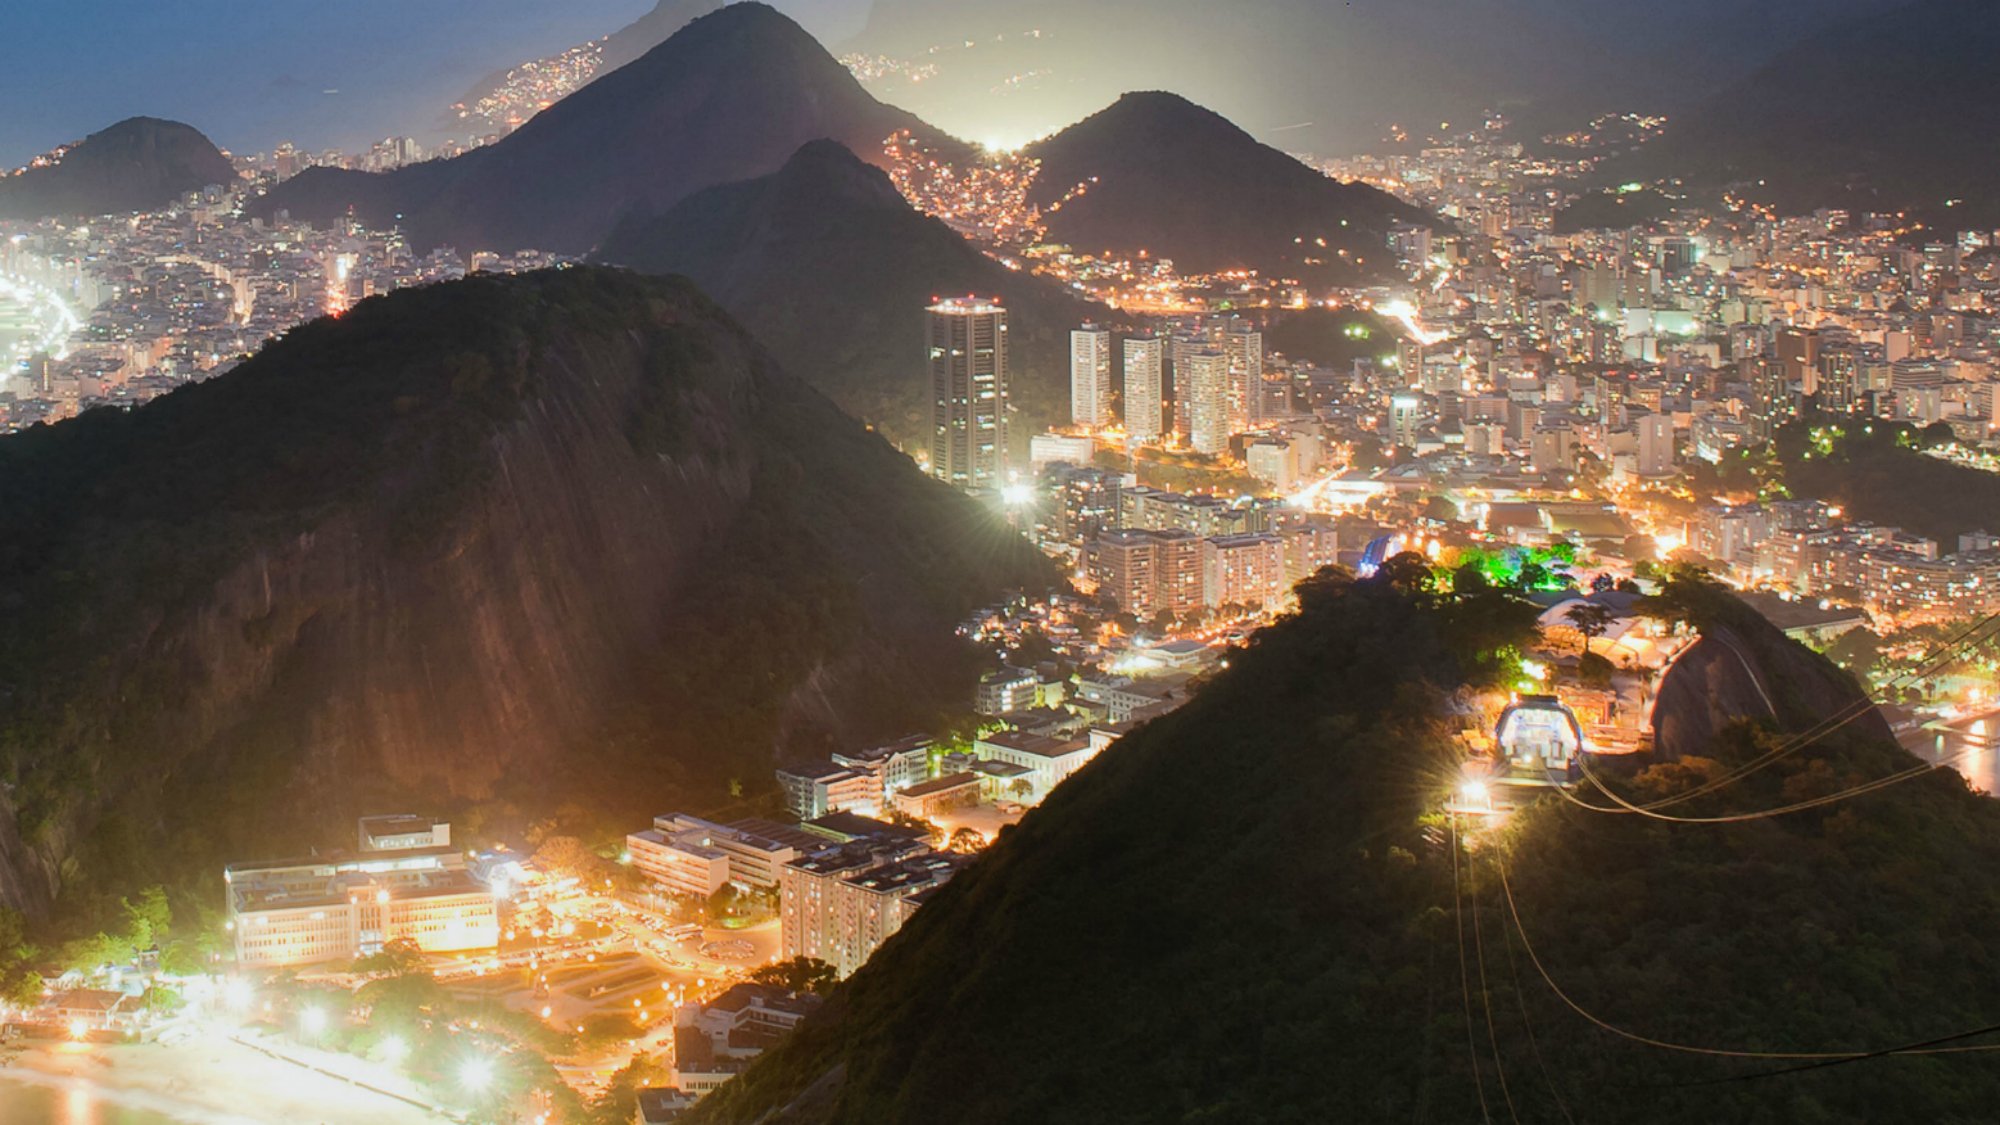 Landscape of Rio consuming energy